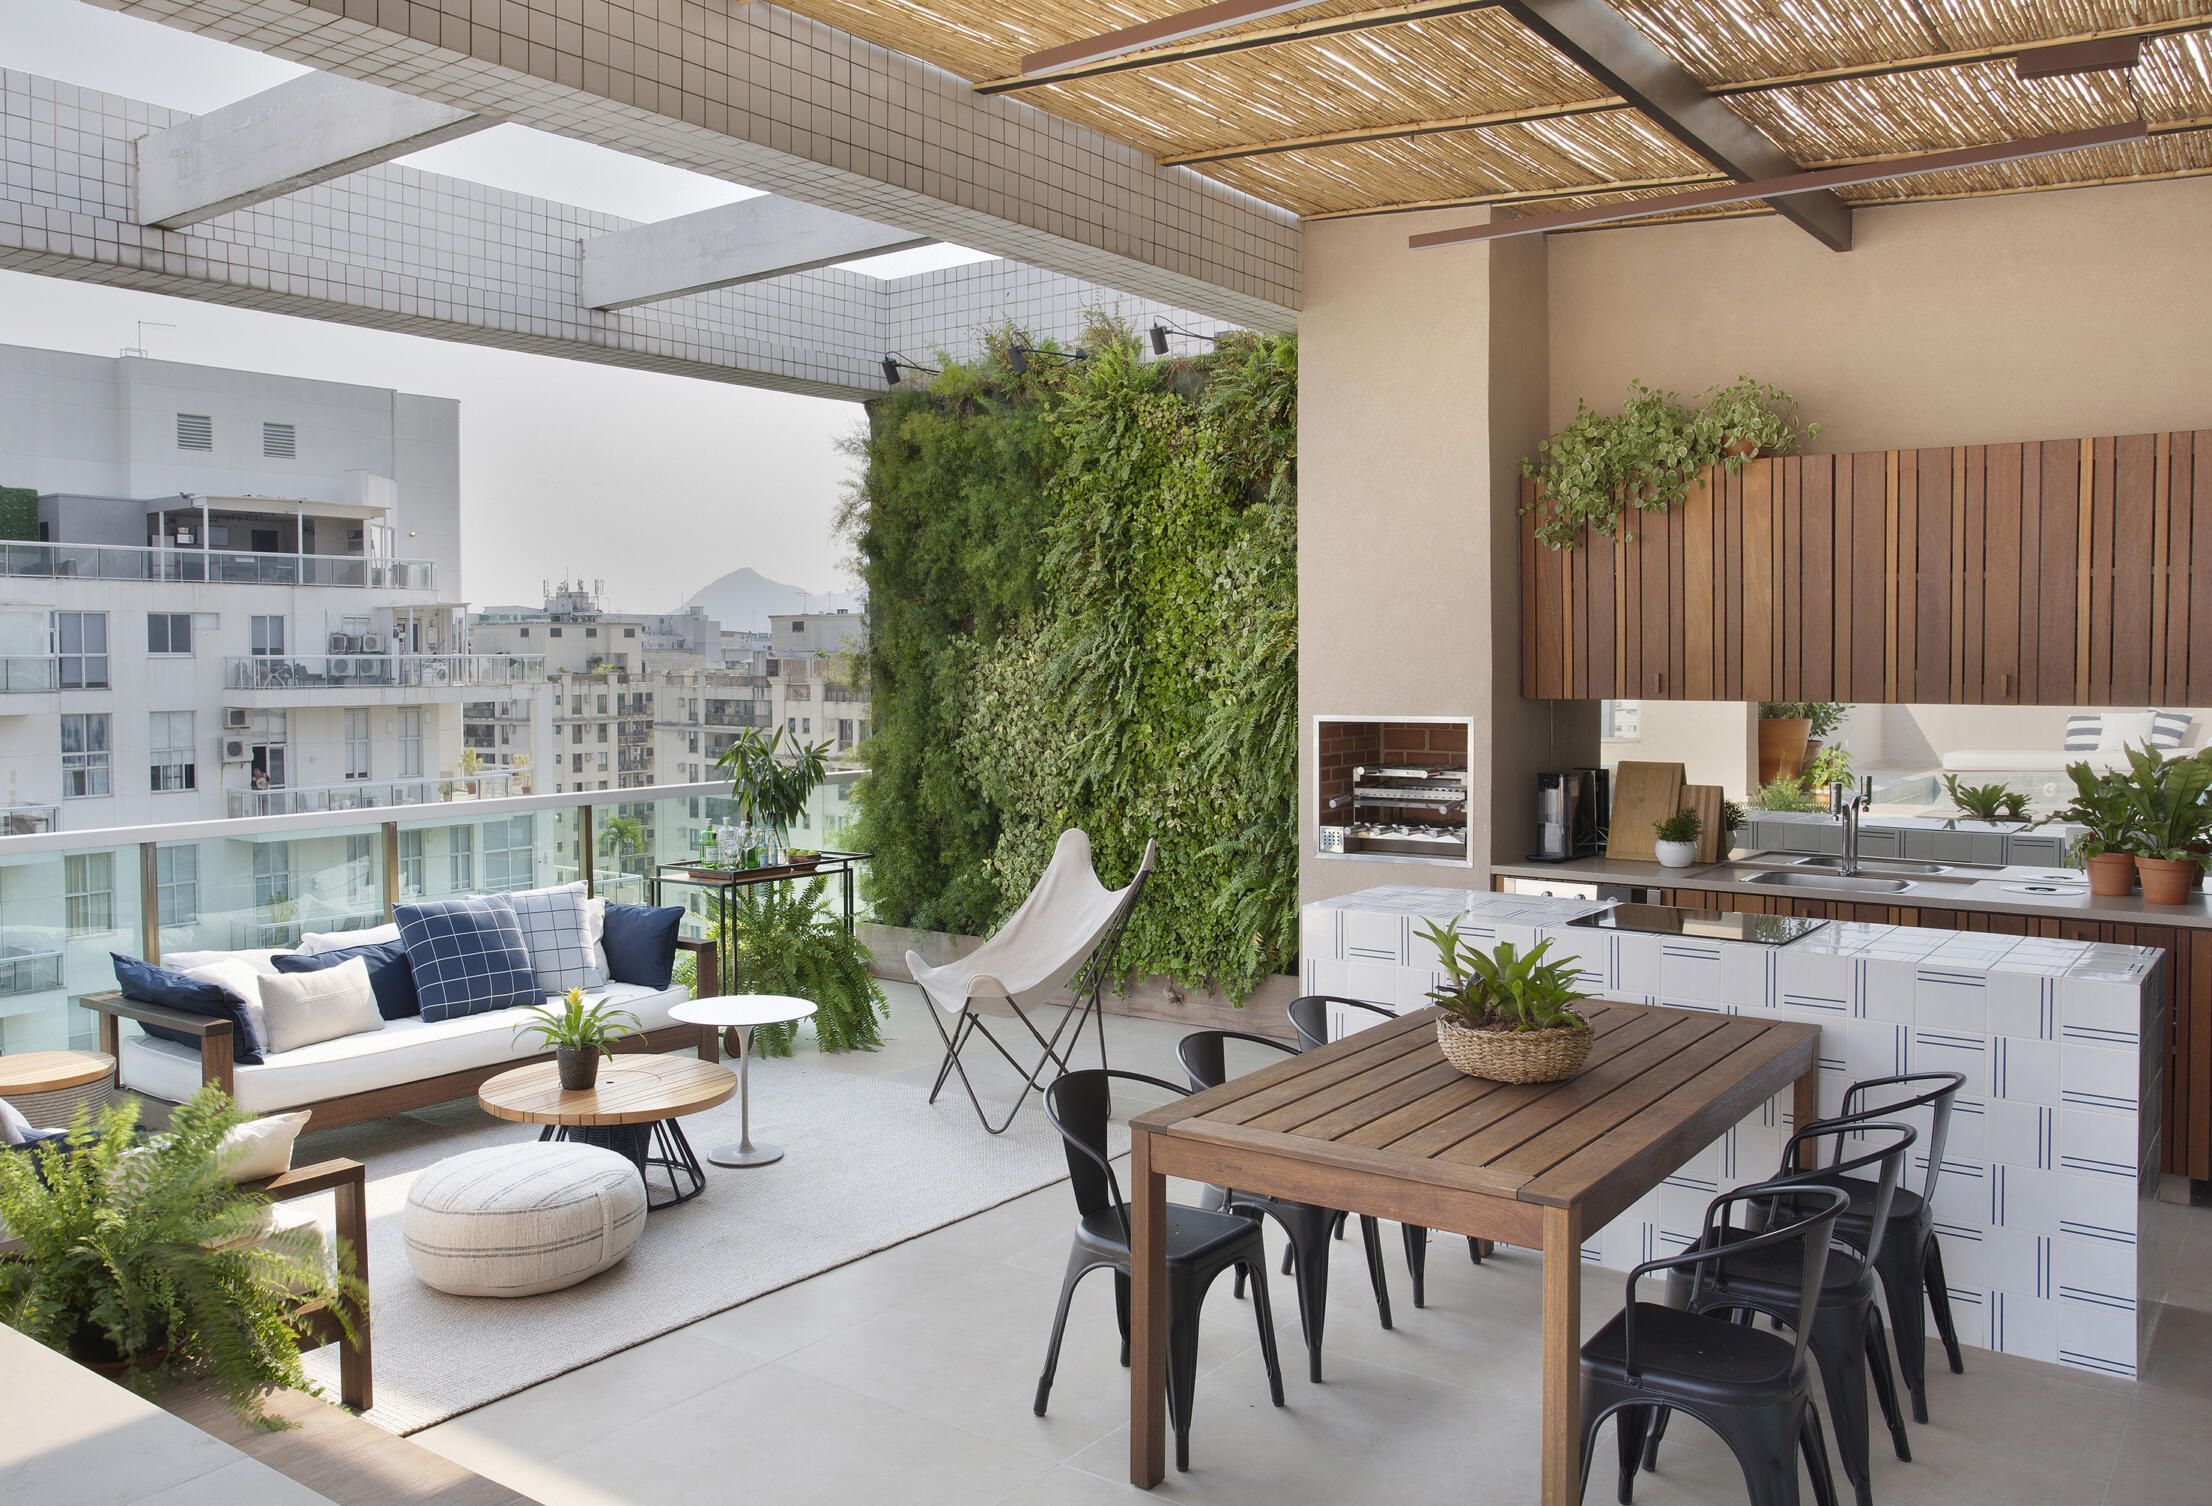 varanda gourmet moderna com jardim vertical